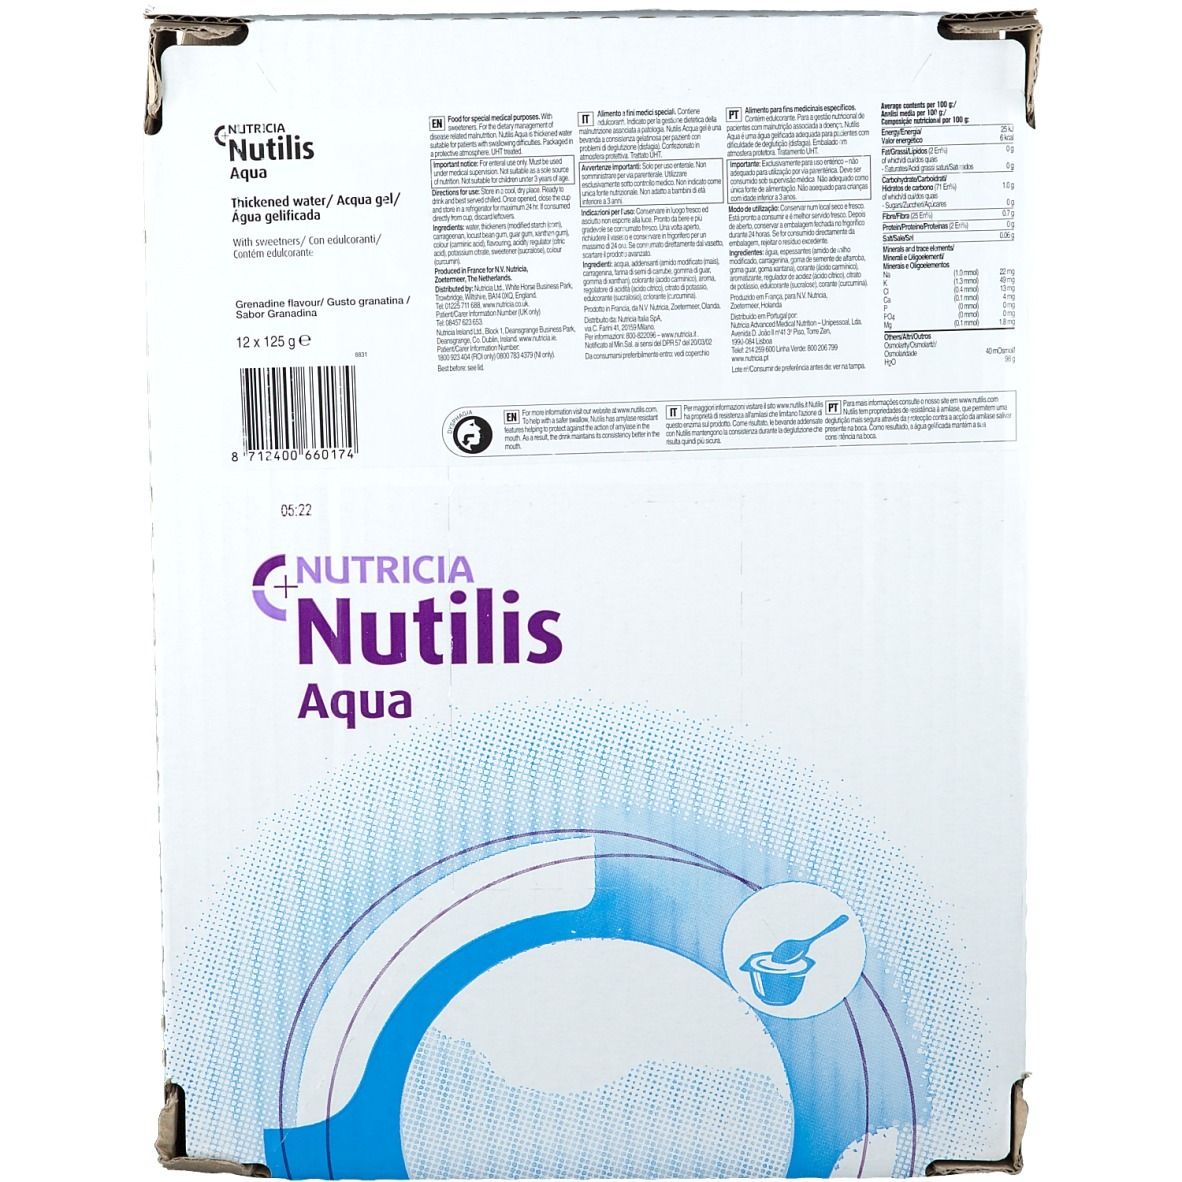 Image of Nutricia Nutilis Aqua Gel Granatina